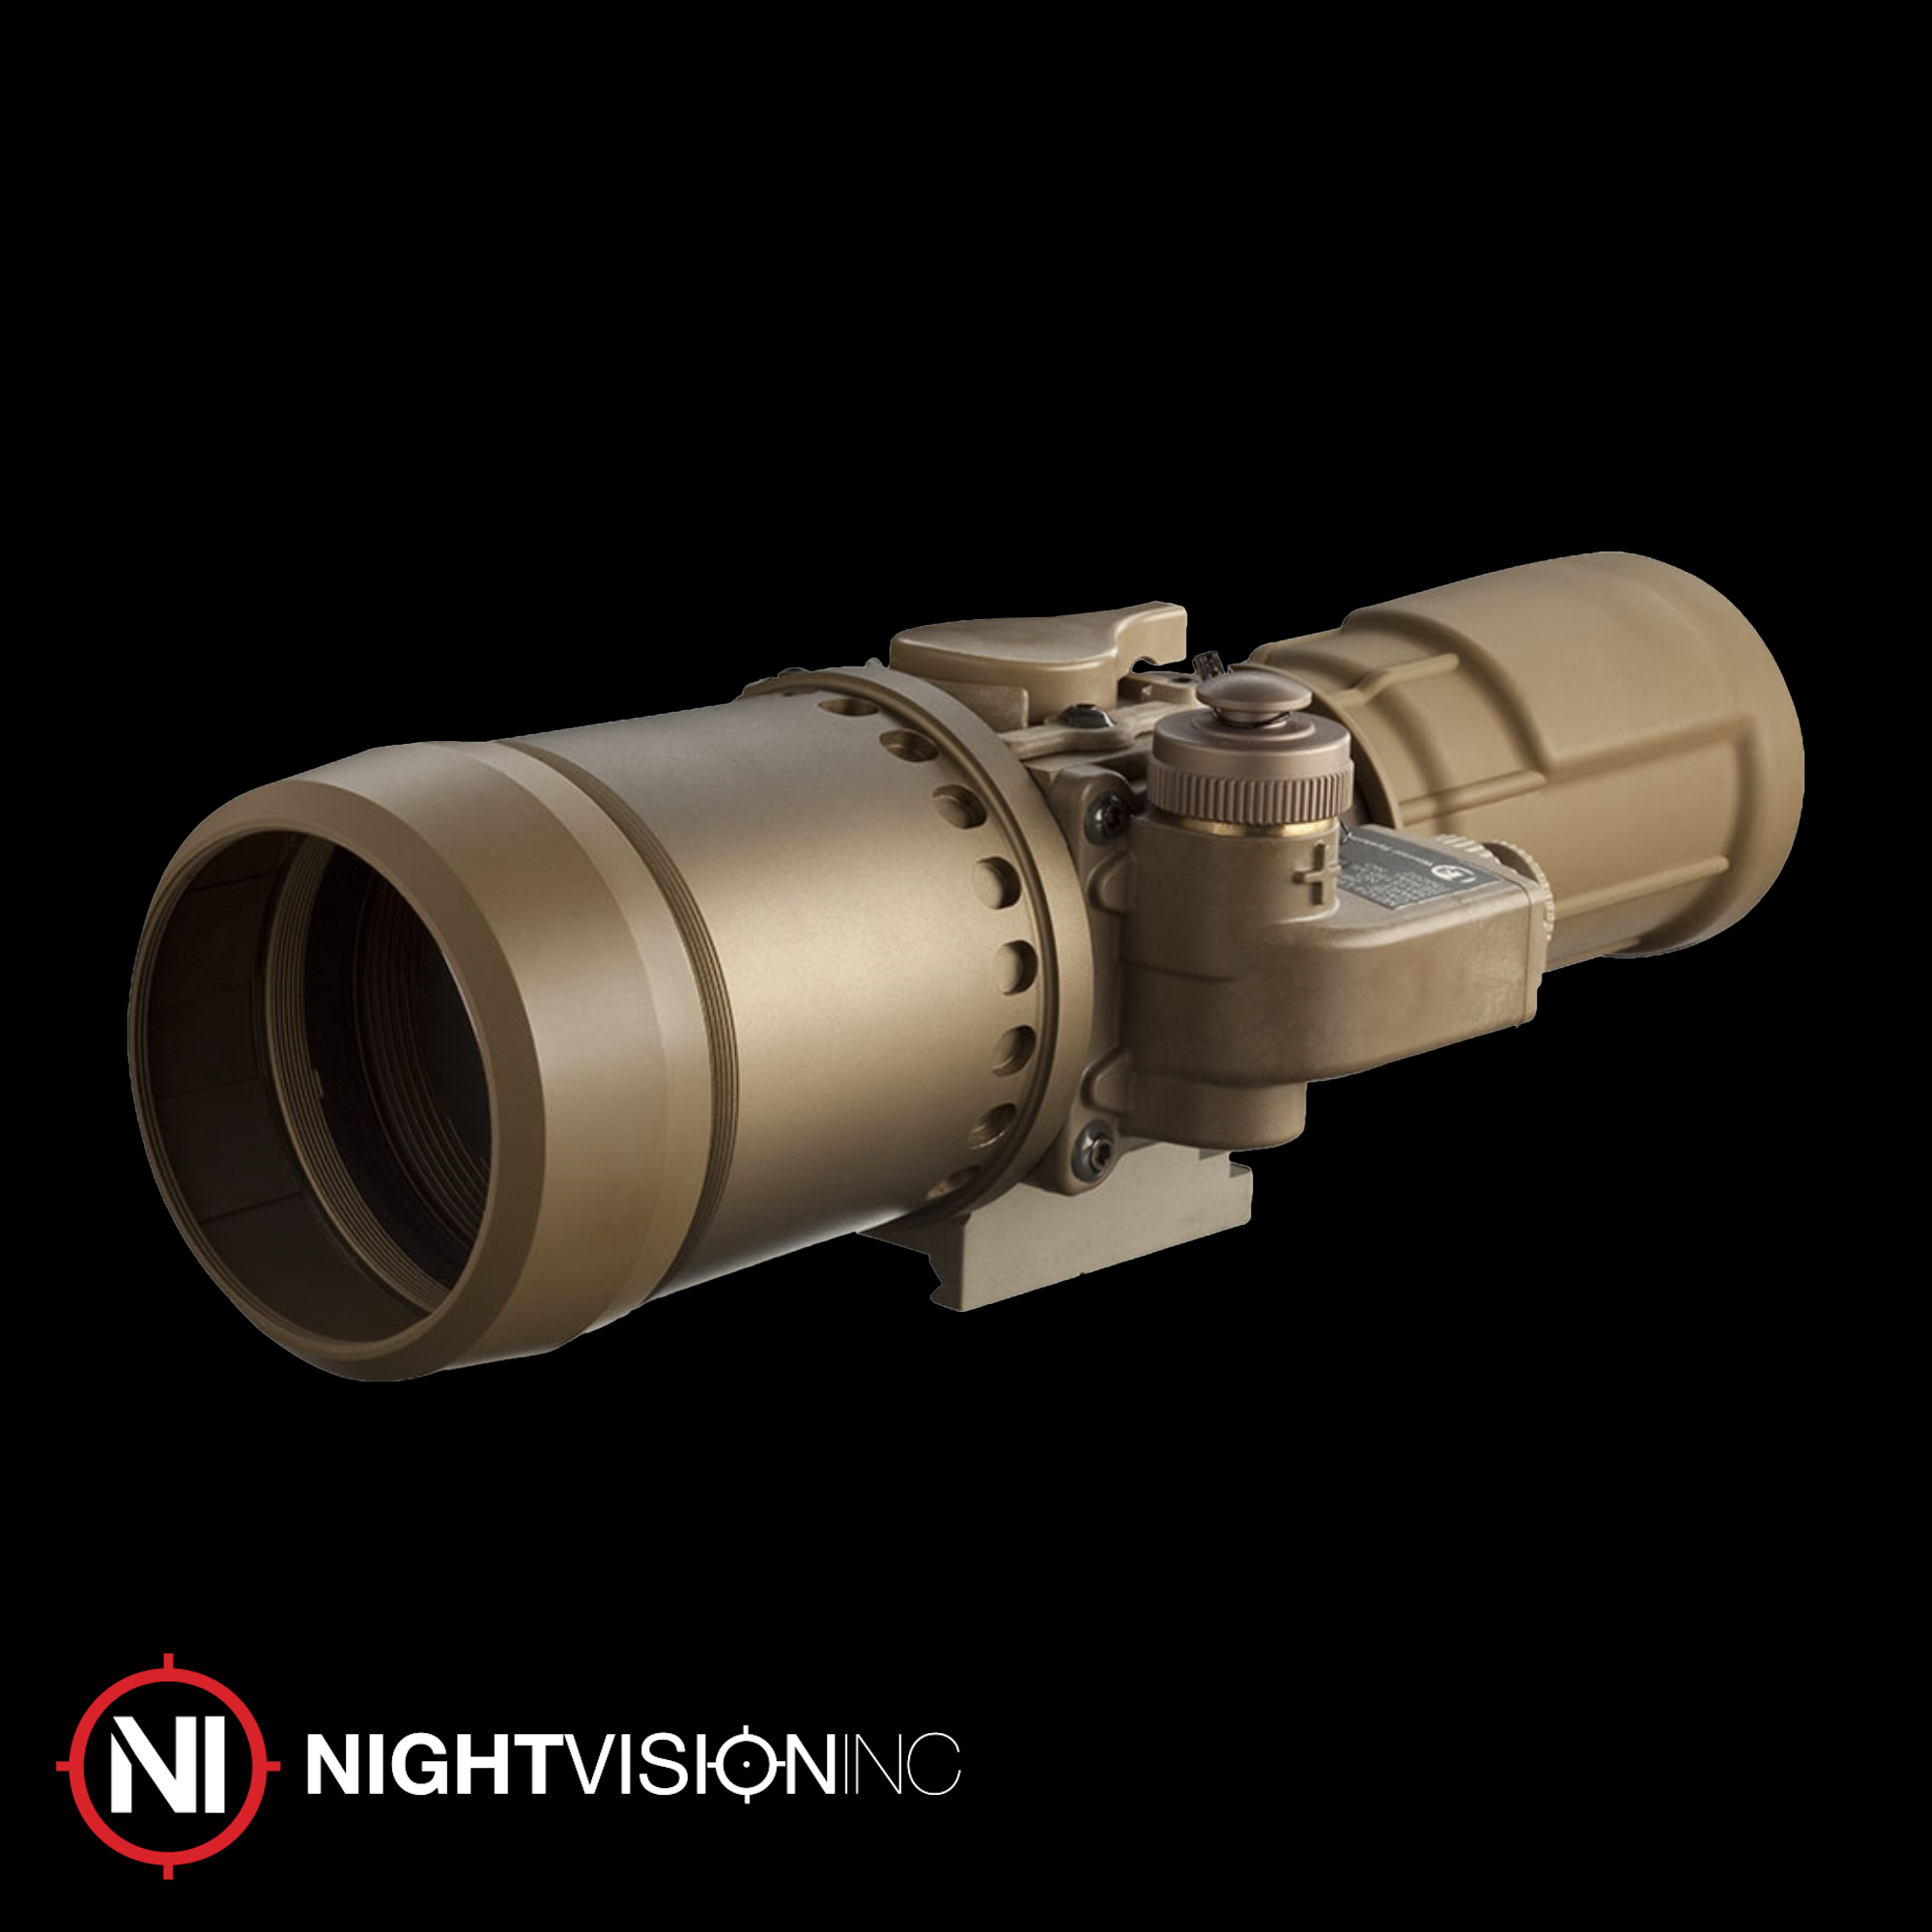 L3 Harris M2124 Cnvd Lr Night Vision Inc 2470